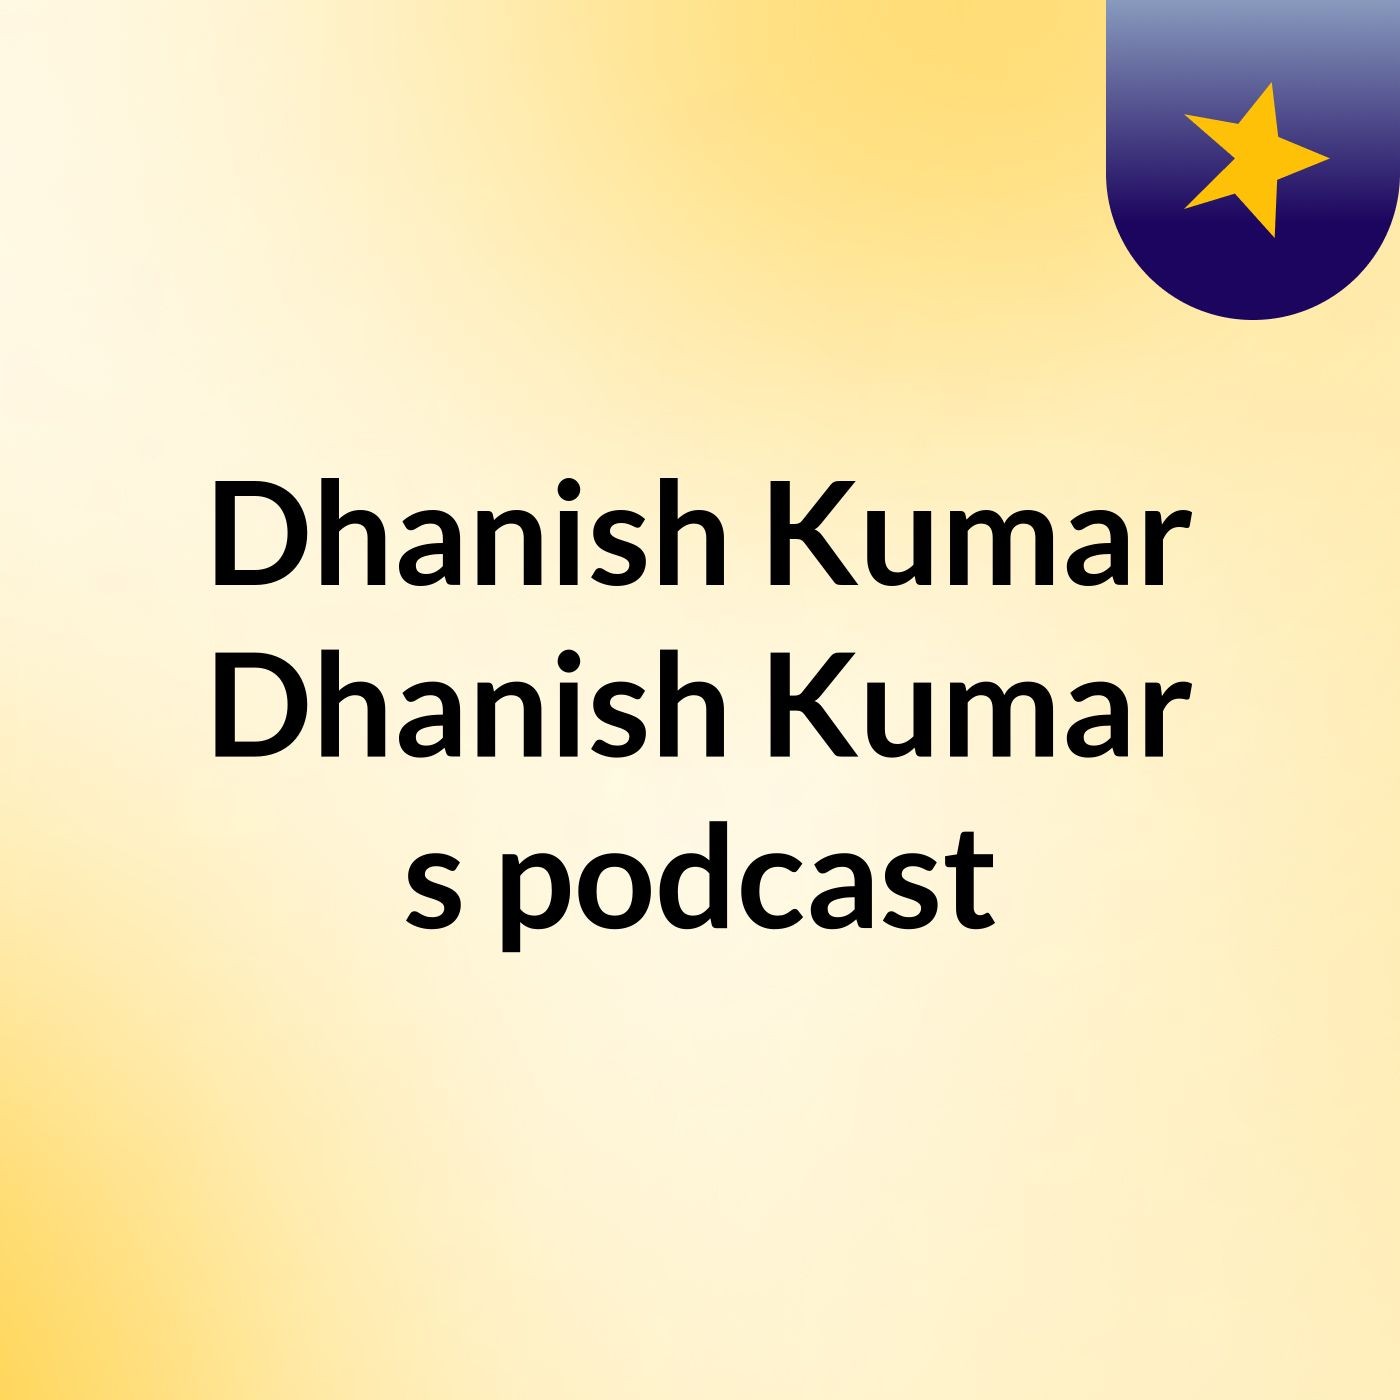 Episode 3 - Dhanish Kumar Dhanish Kumar's podcast